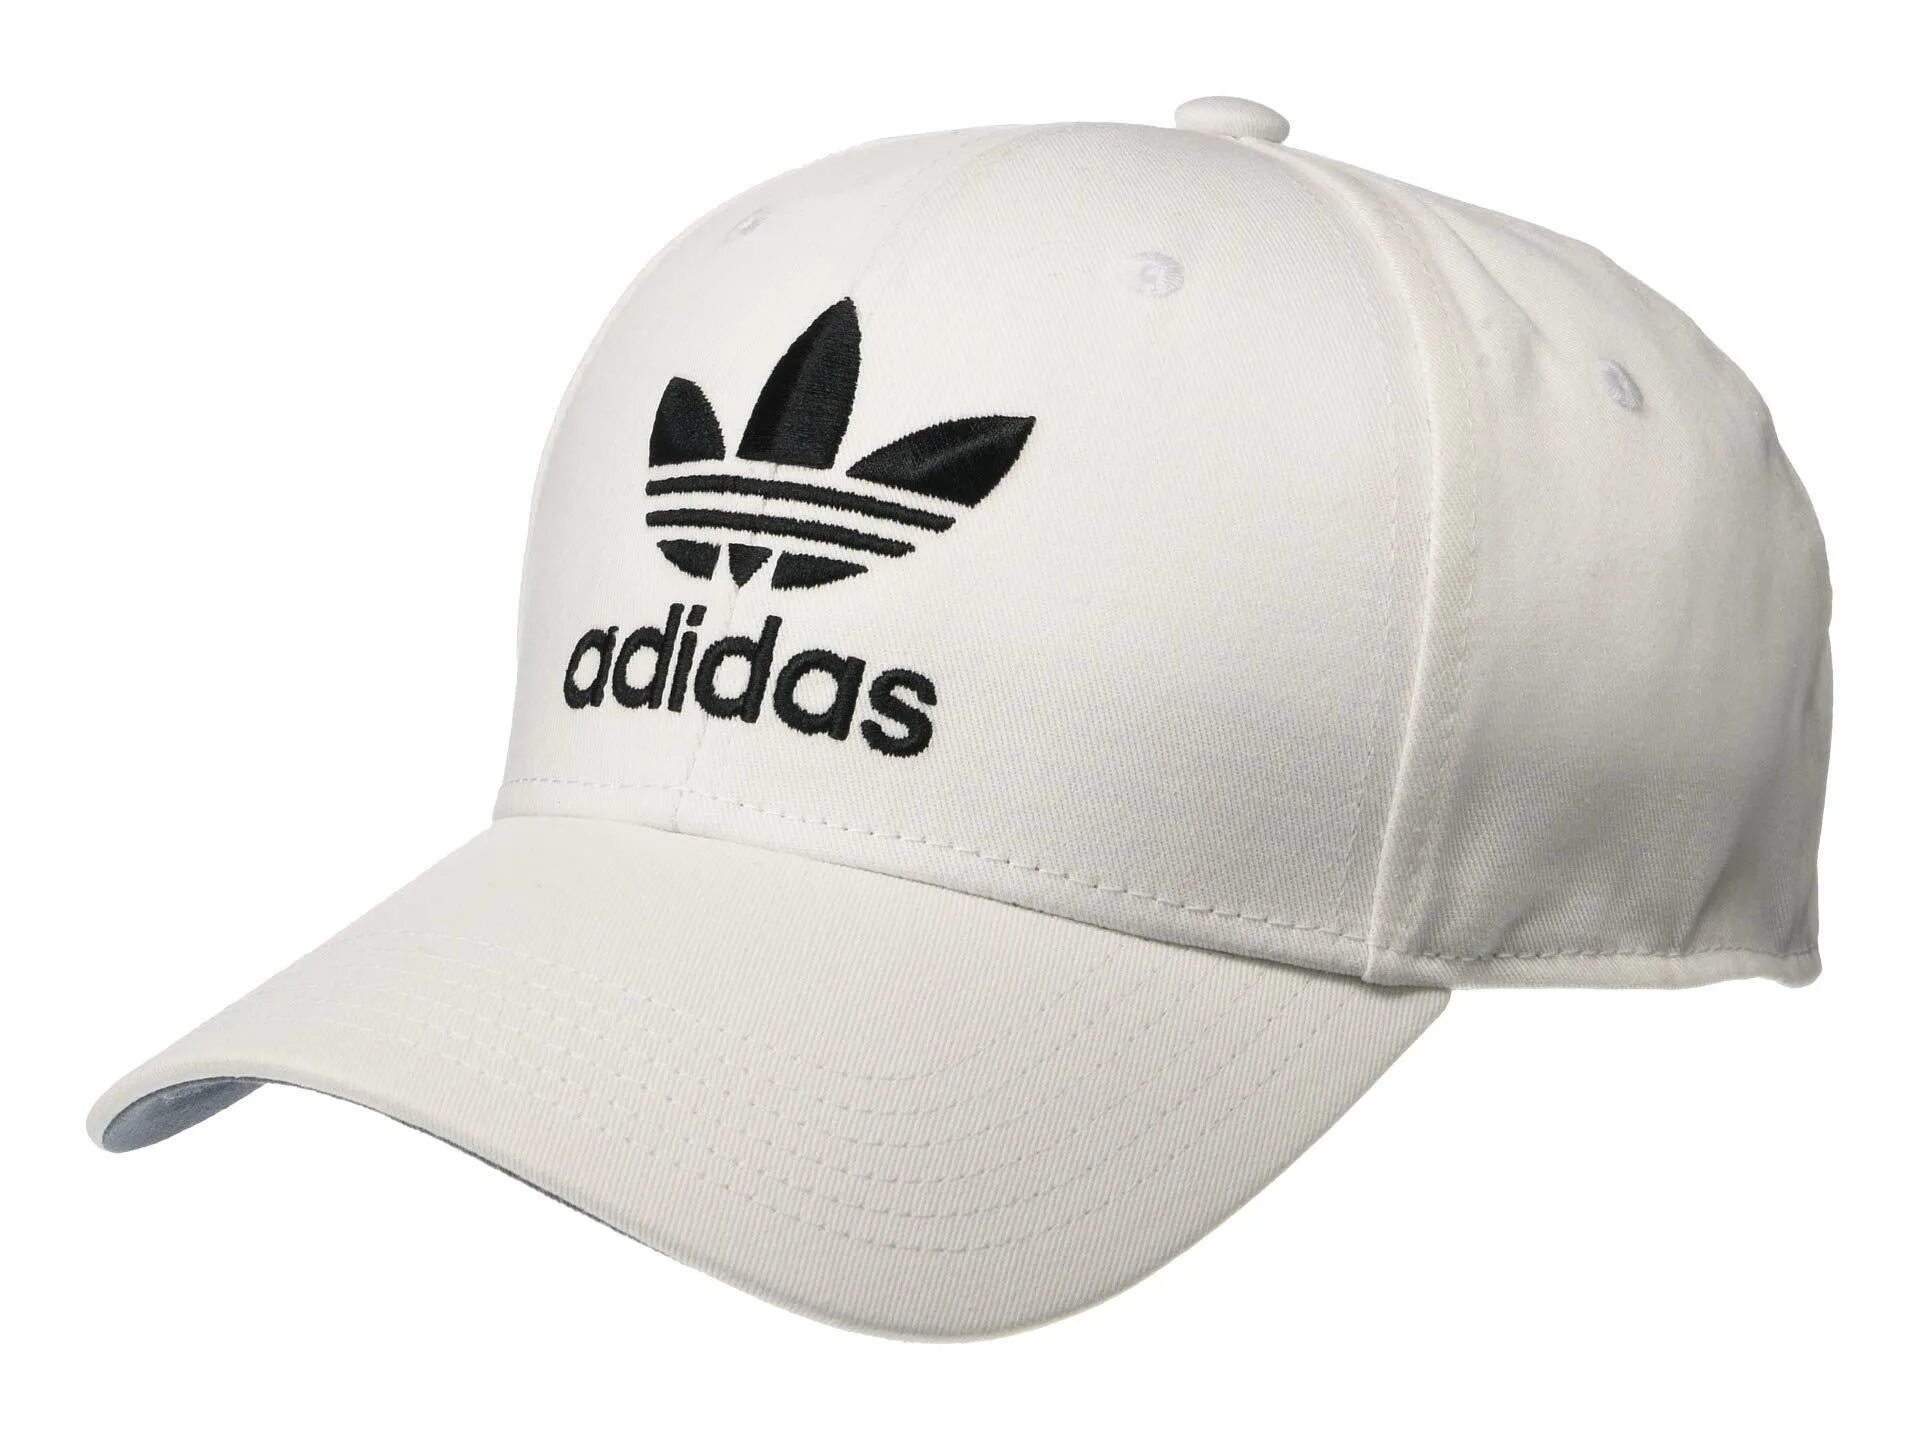 Adidas бейсболка w55072. Бейсболка adidas Originals baseall Street cap. Бейсболка adidas Trio cap белая. Бейсболка adidas Snapback lo cap.